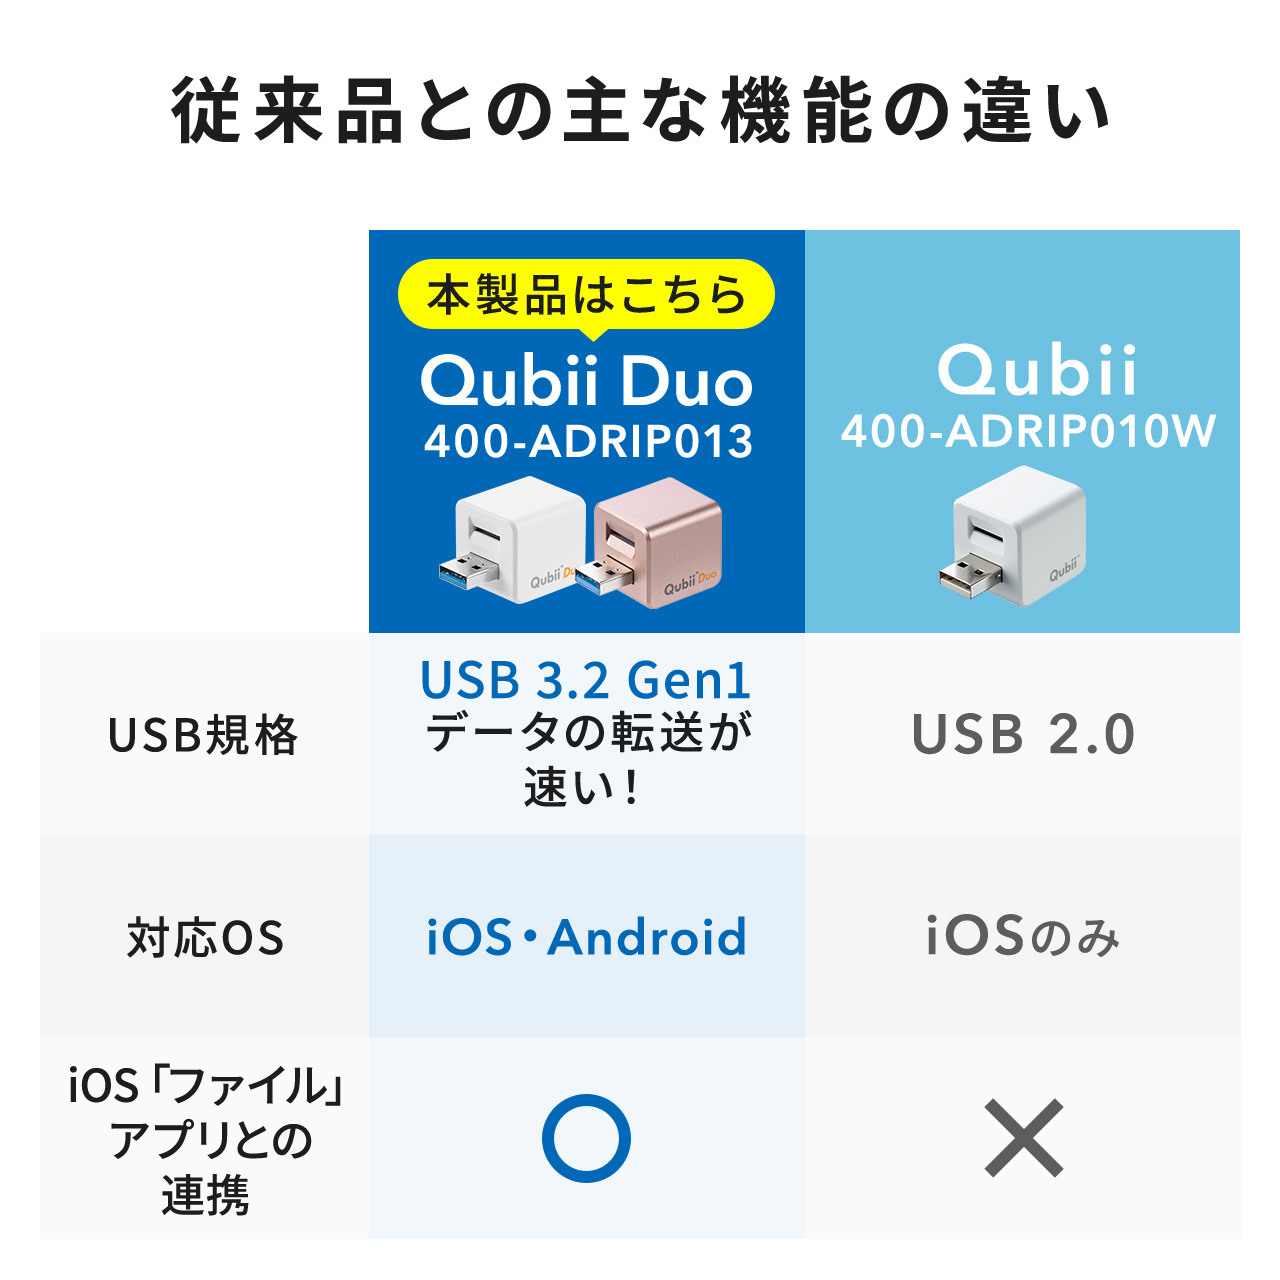 yV[NbgZ[zQubii Duo USB-A zCg iPhone iPad iOS Android obNAbv eʕs iPhone15Ή 400-ADRIP013W